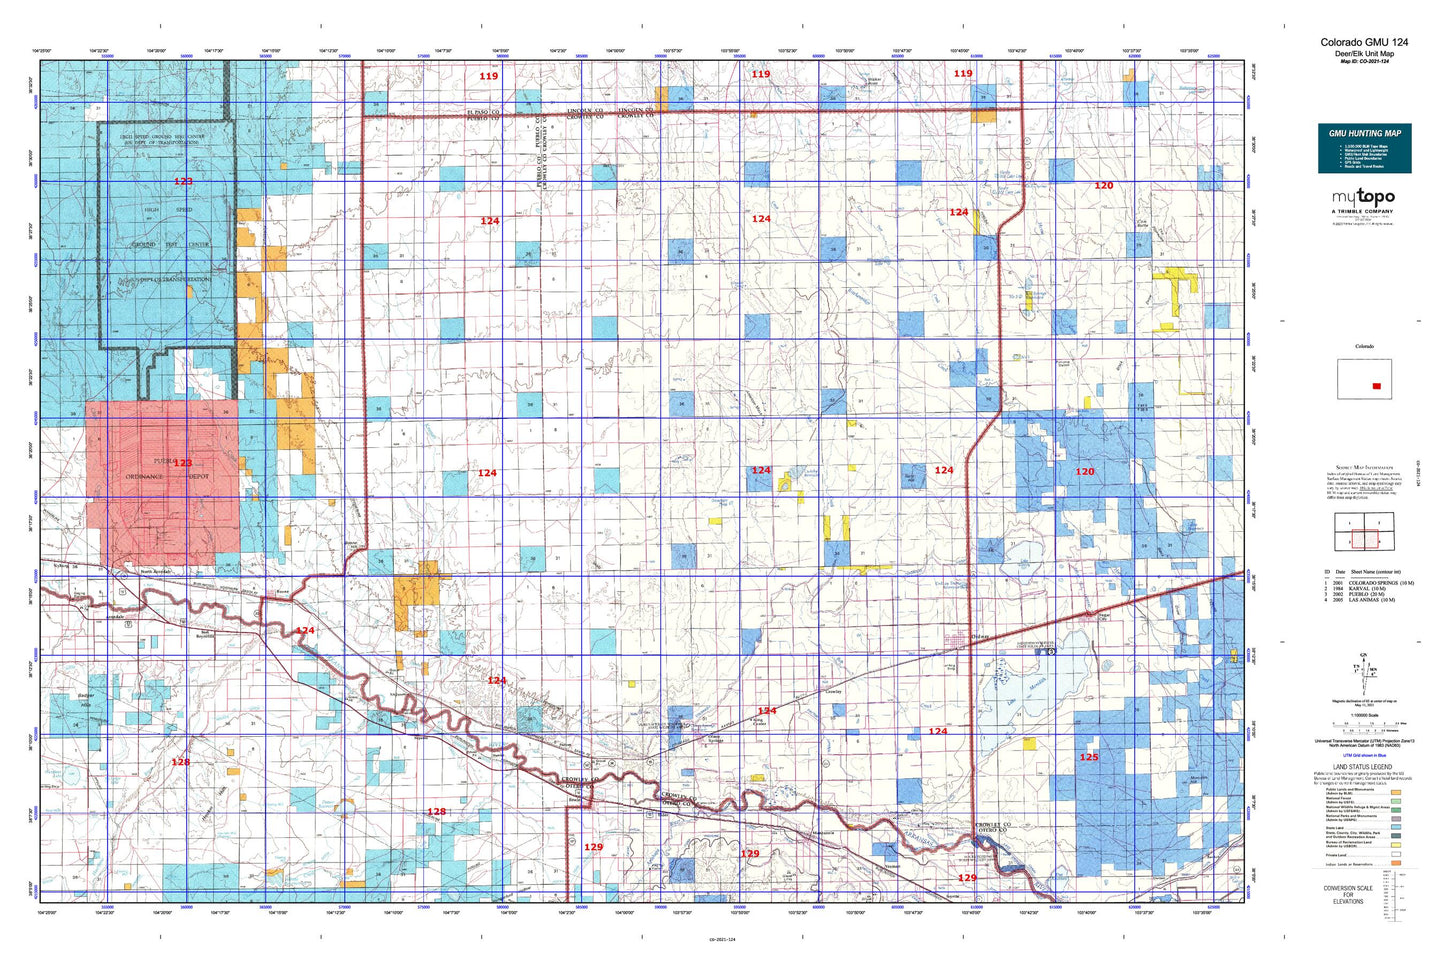 Colorado GMU 124 Map Image